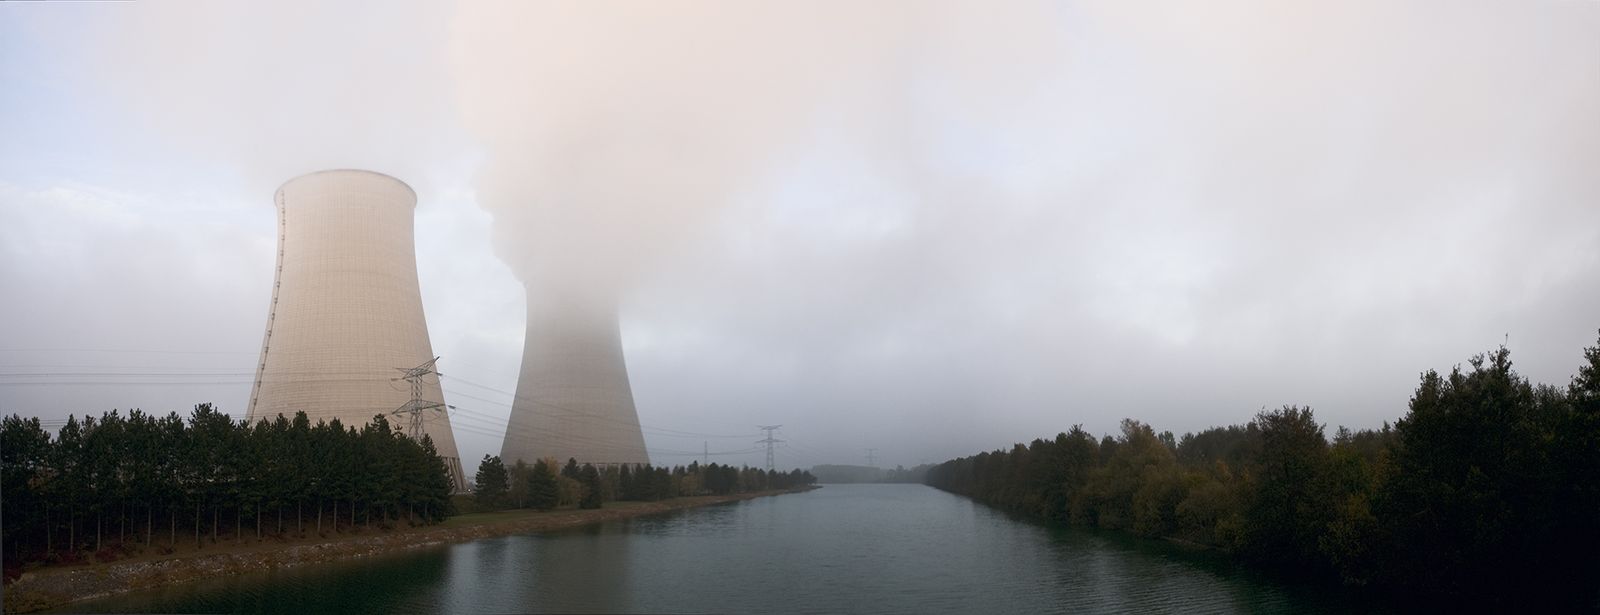 © Marco Caterini - 1Nogent Nuclear Power Station, Nogent-sur-Seine, France 2009